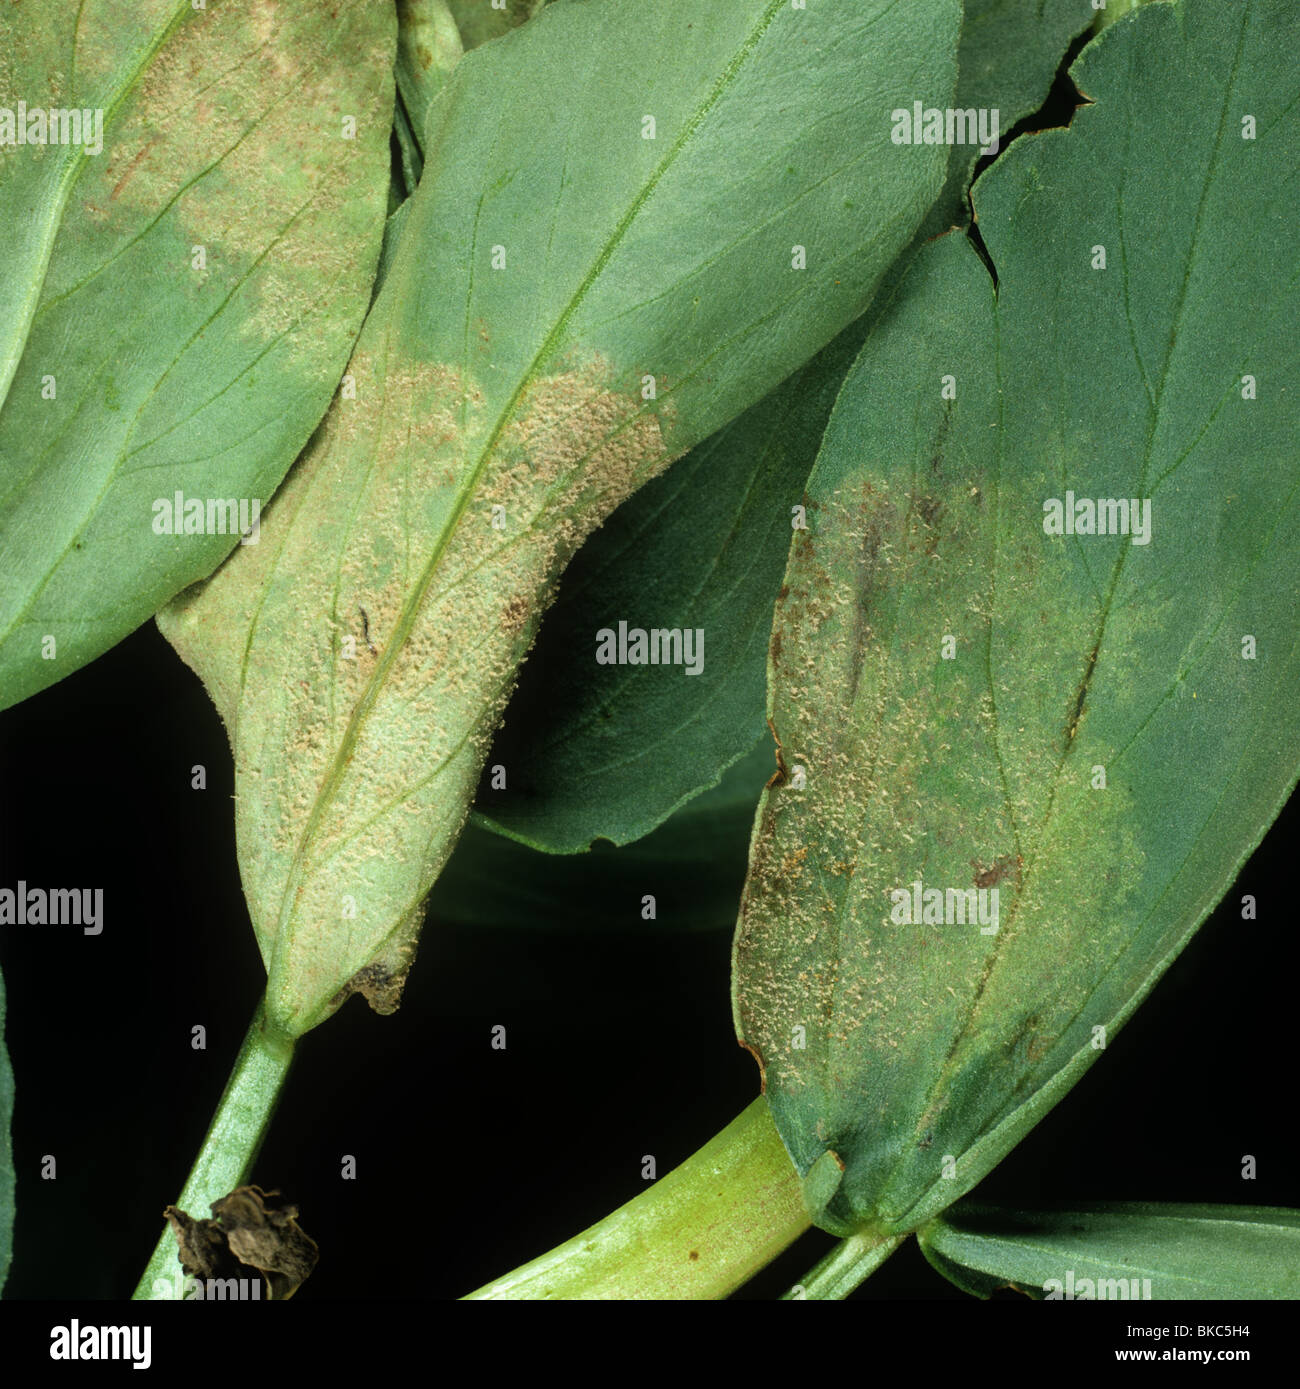 Downy mildew (Peronospora viciae) early fungal development on field bean leaves Stock Photo